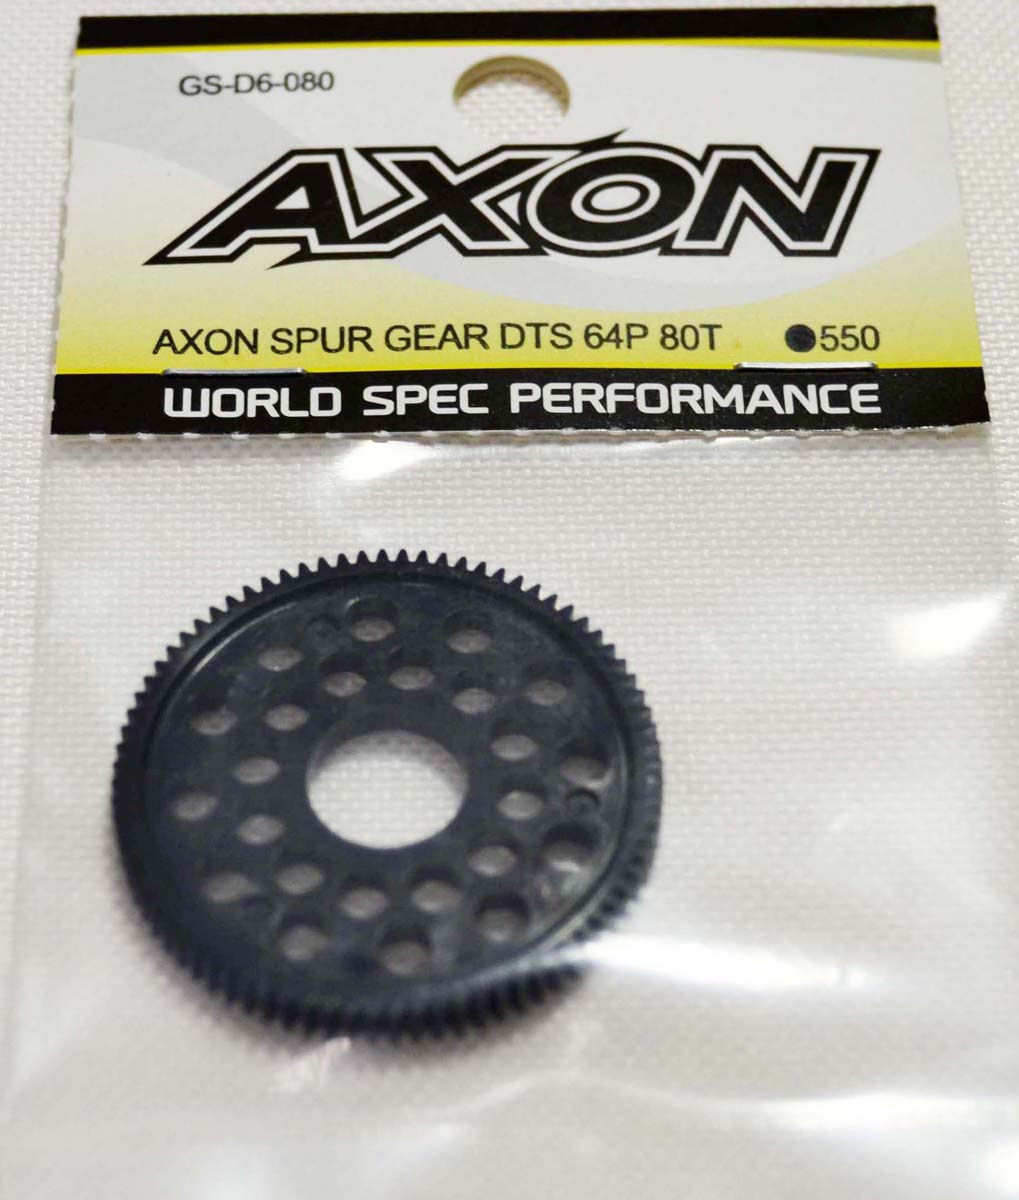 AXON AXON SPUR GEAR DTS 64P 80TyGS-D6-080z WRp[c